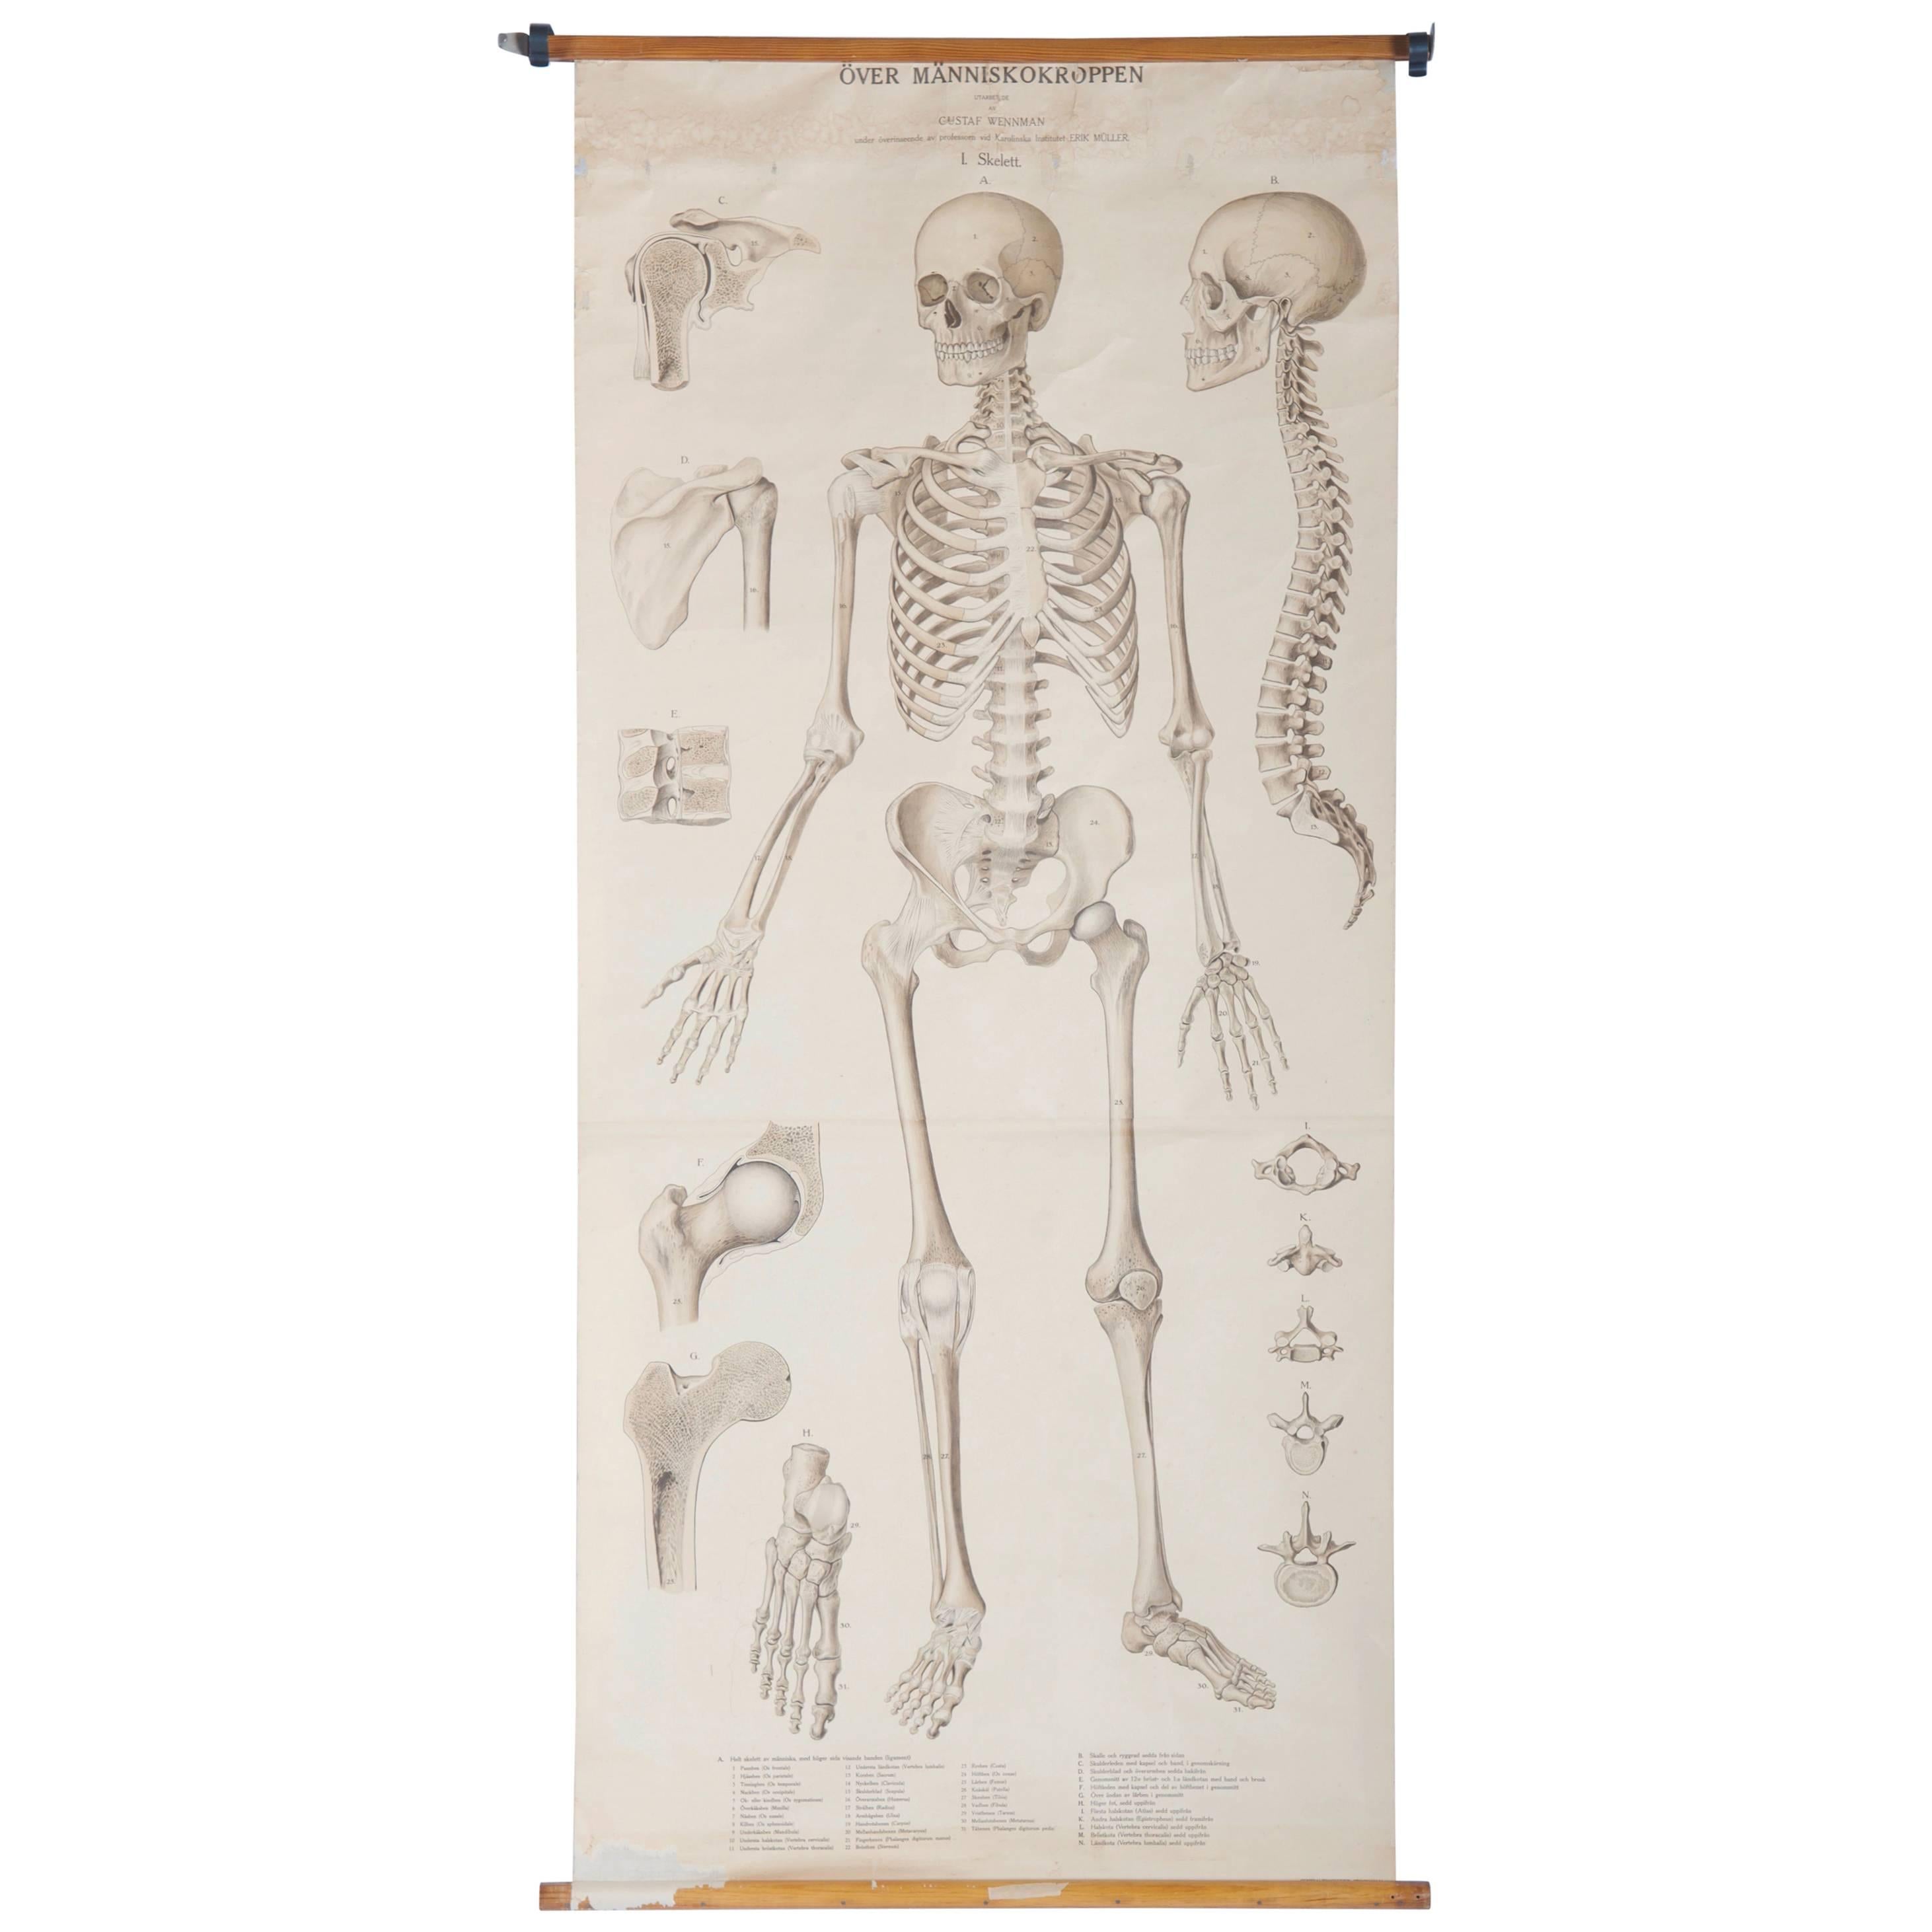 Vintage School Teaching Chart "Human Skeleton"